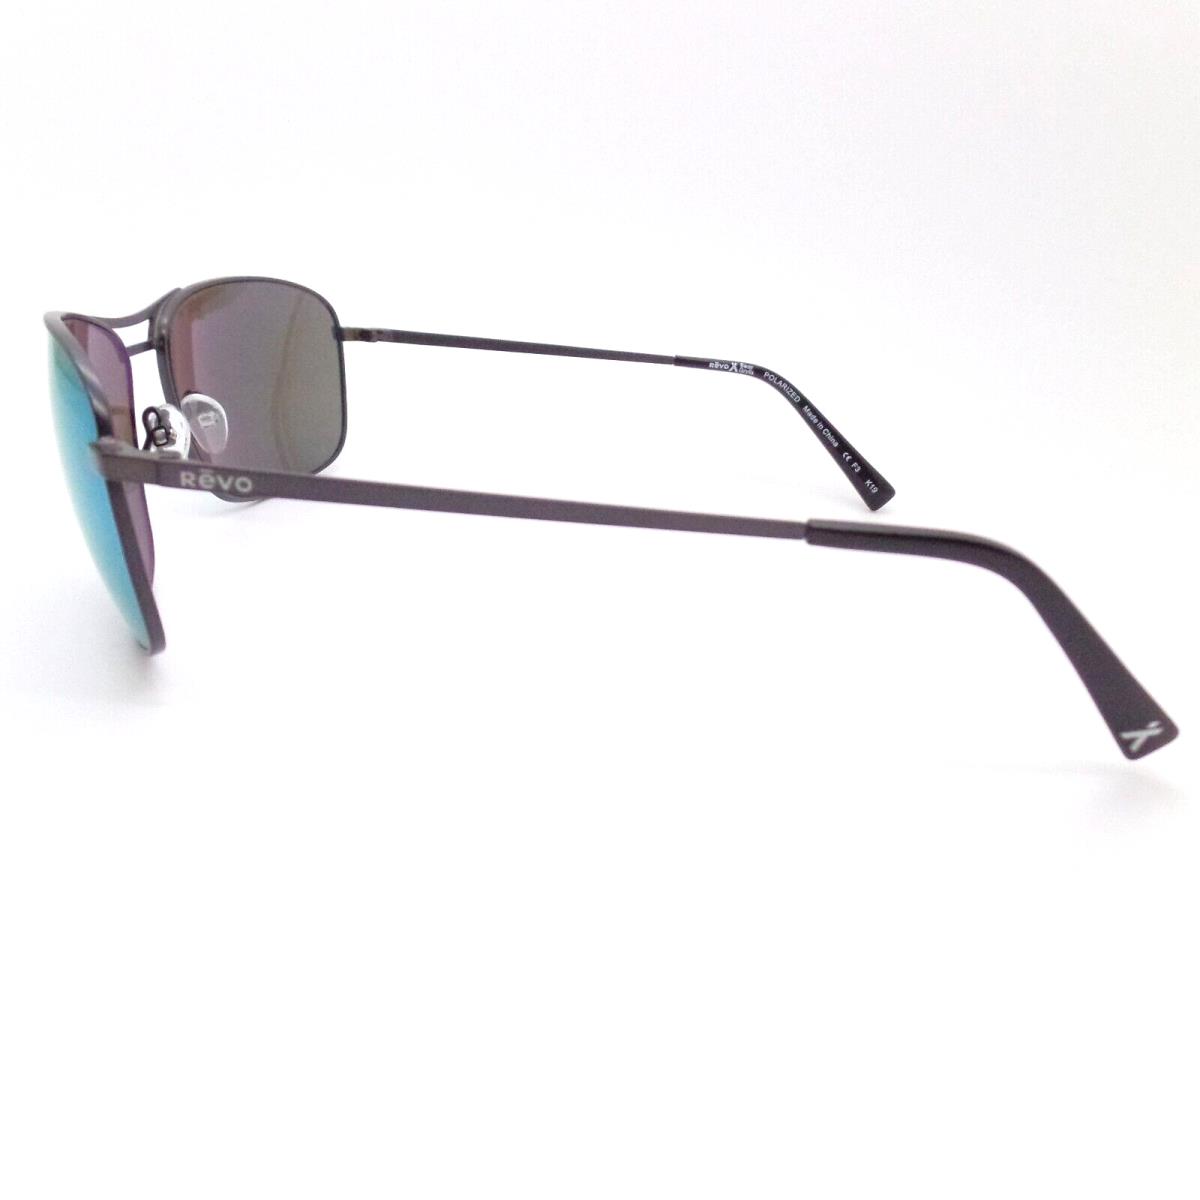 Revo sunglasses  - Matte Dark Gunmetal Frame 2